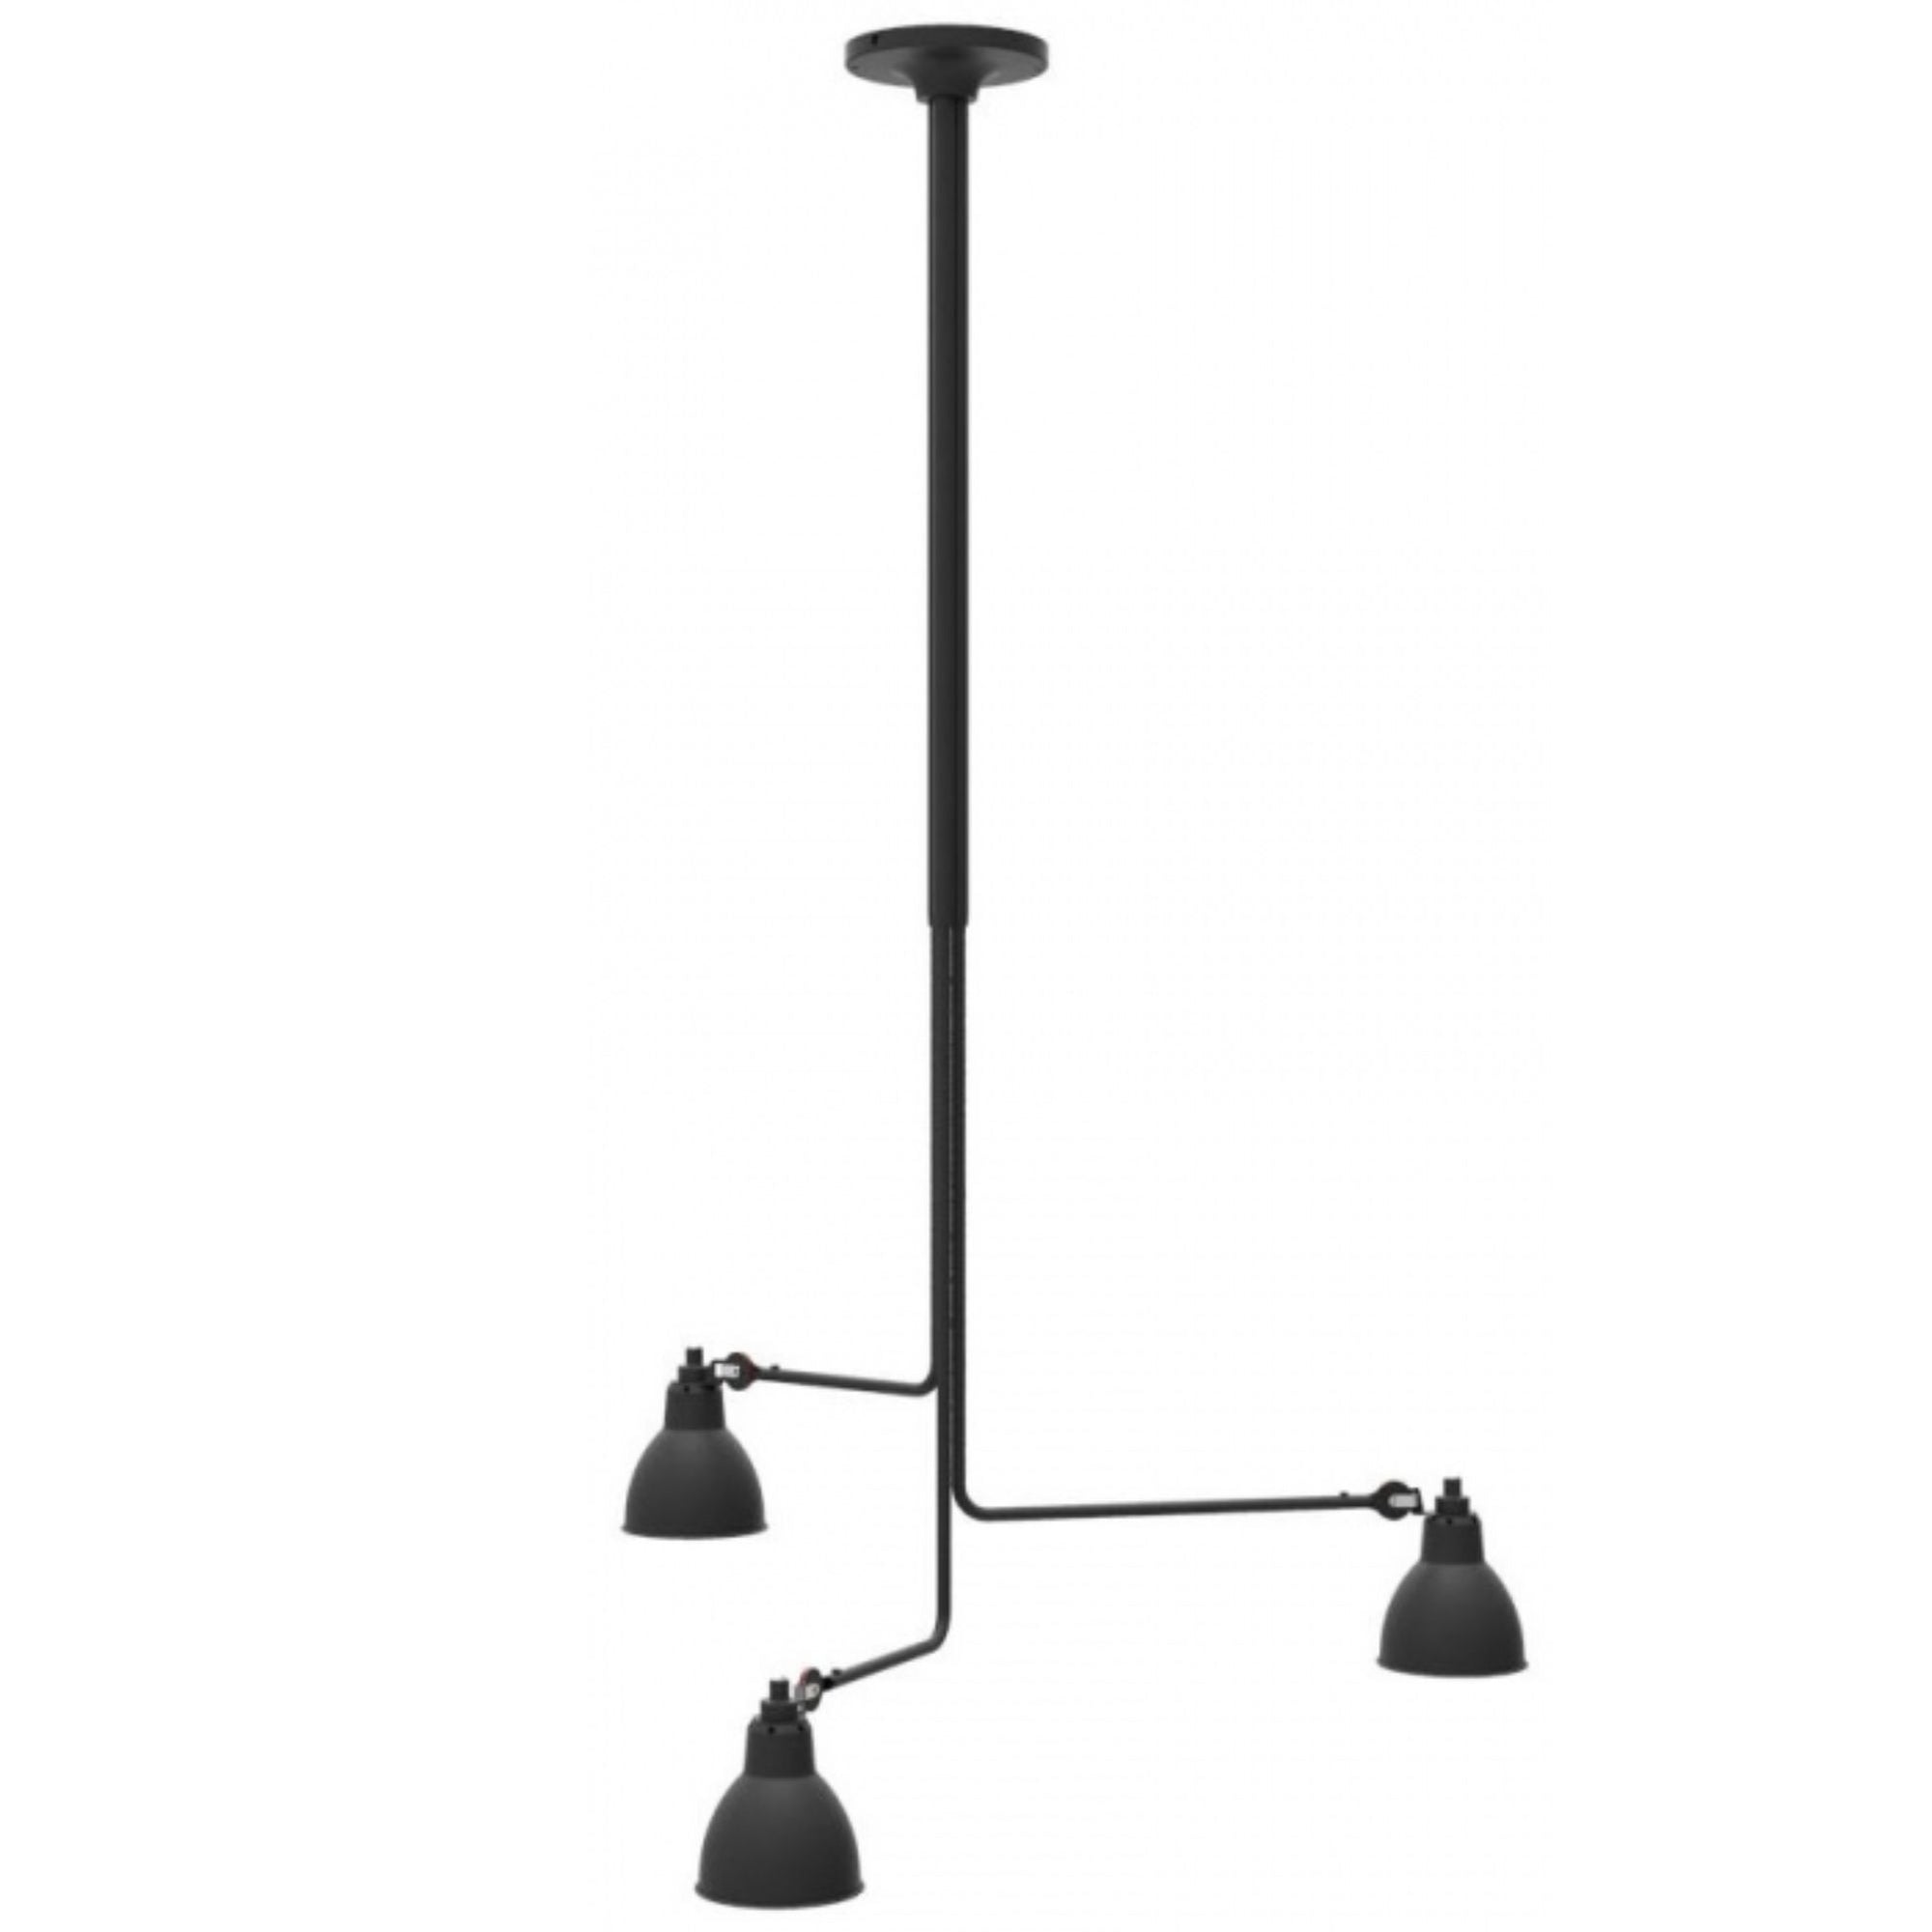 DCW Lampe Gras 315 ceiling light, black/black